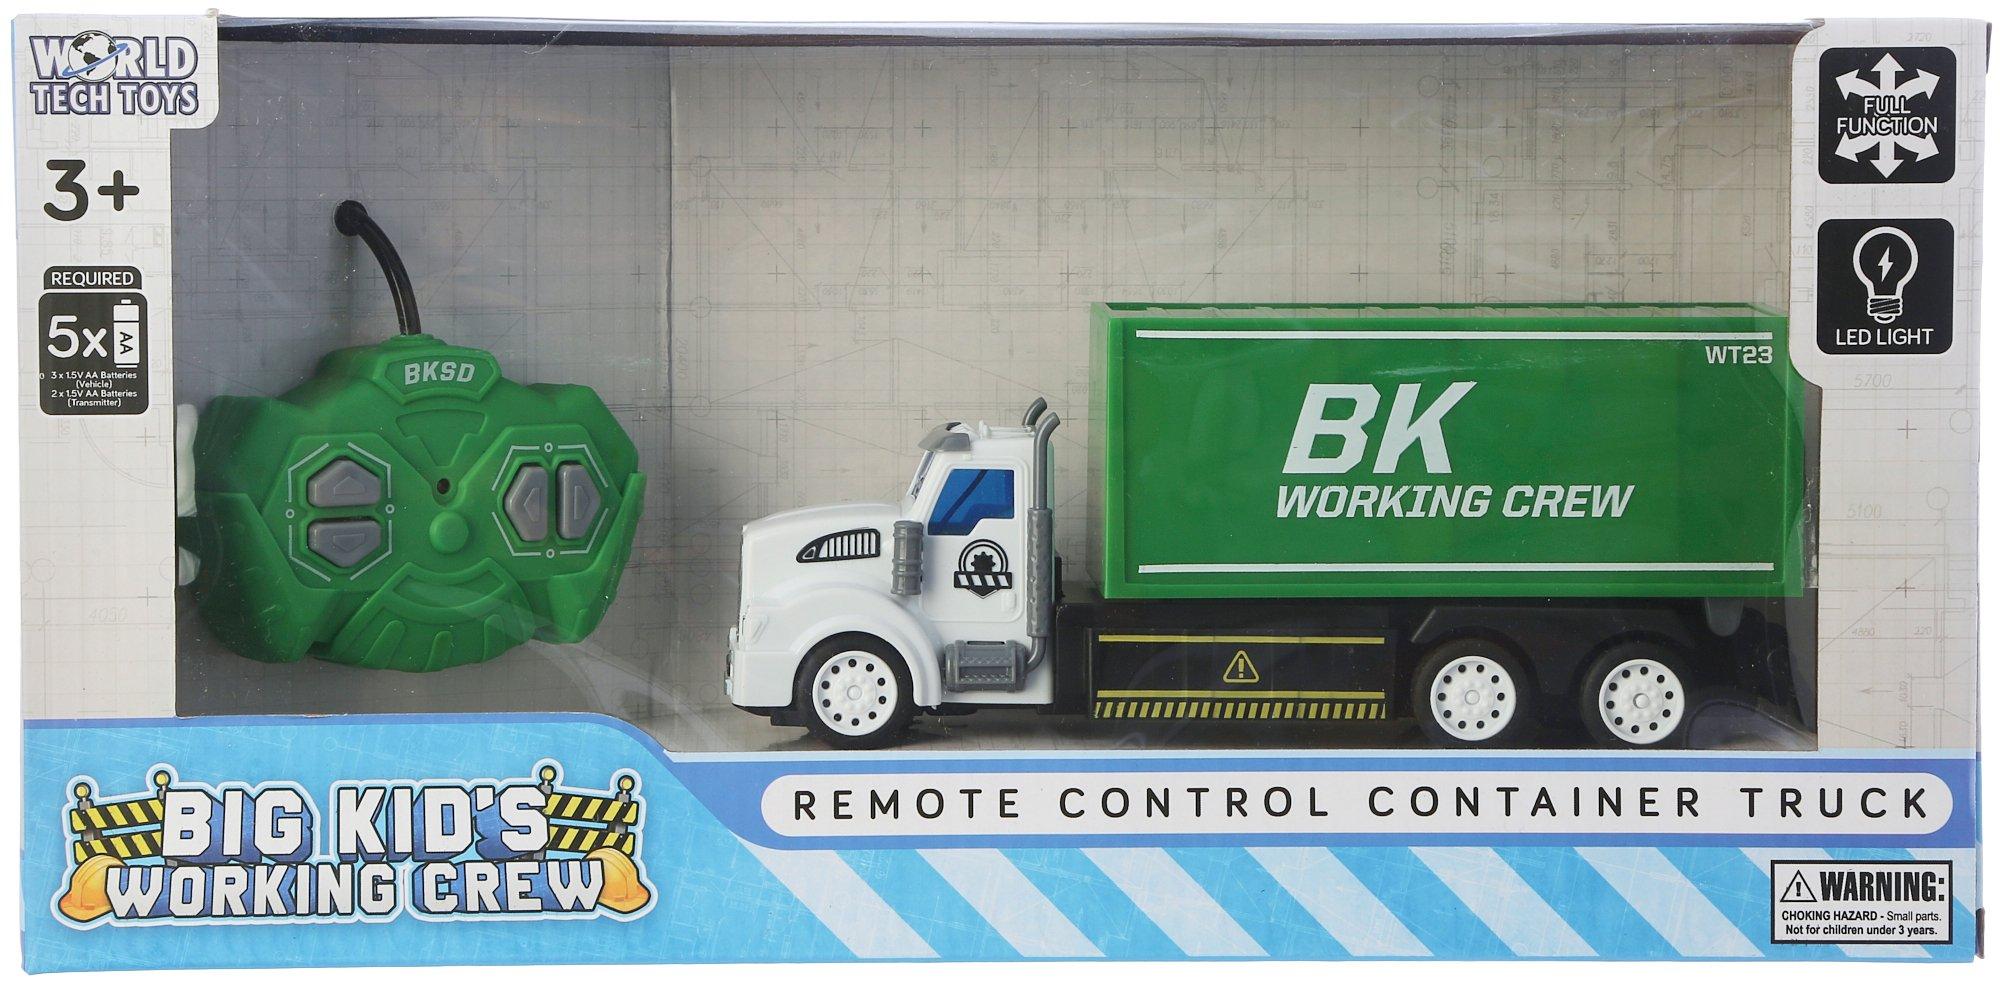 Remote Control Container Truck